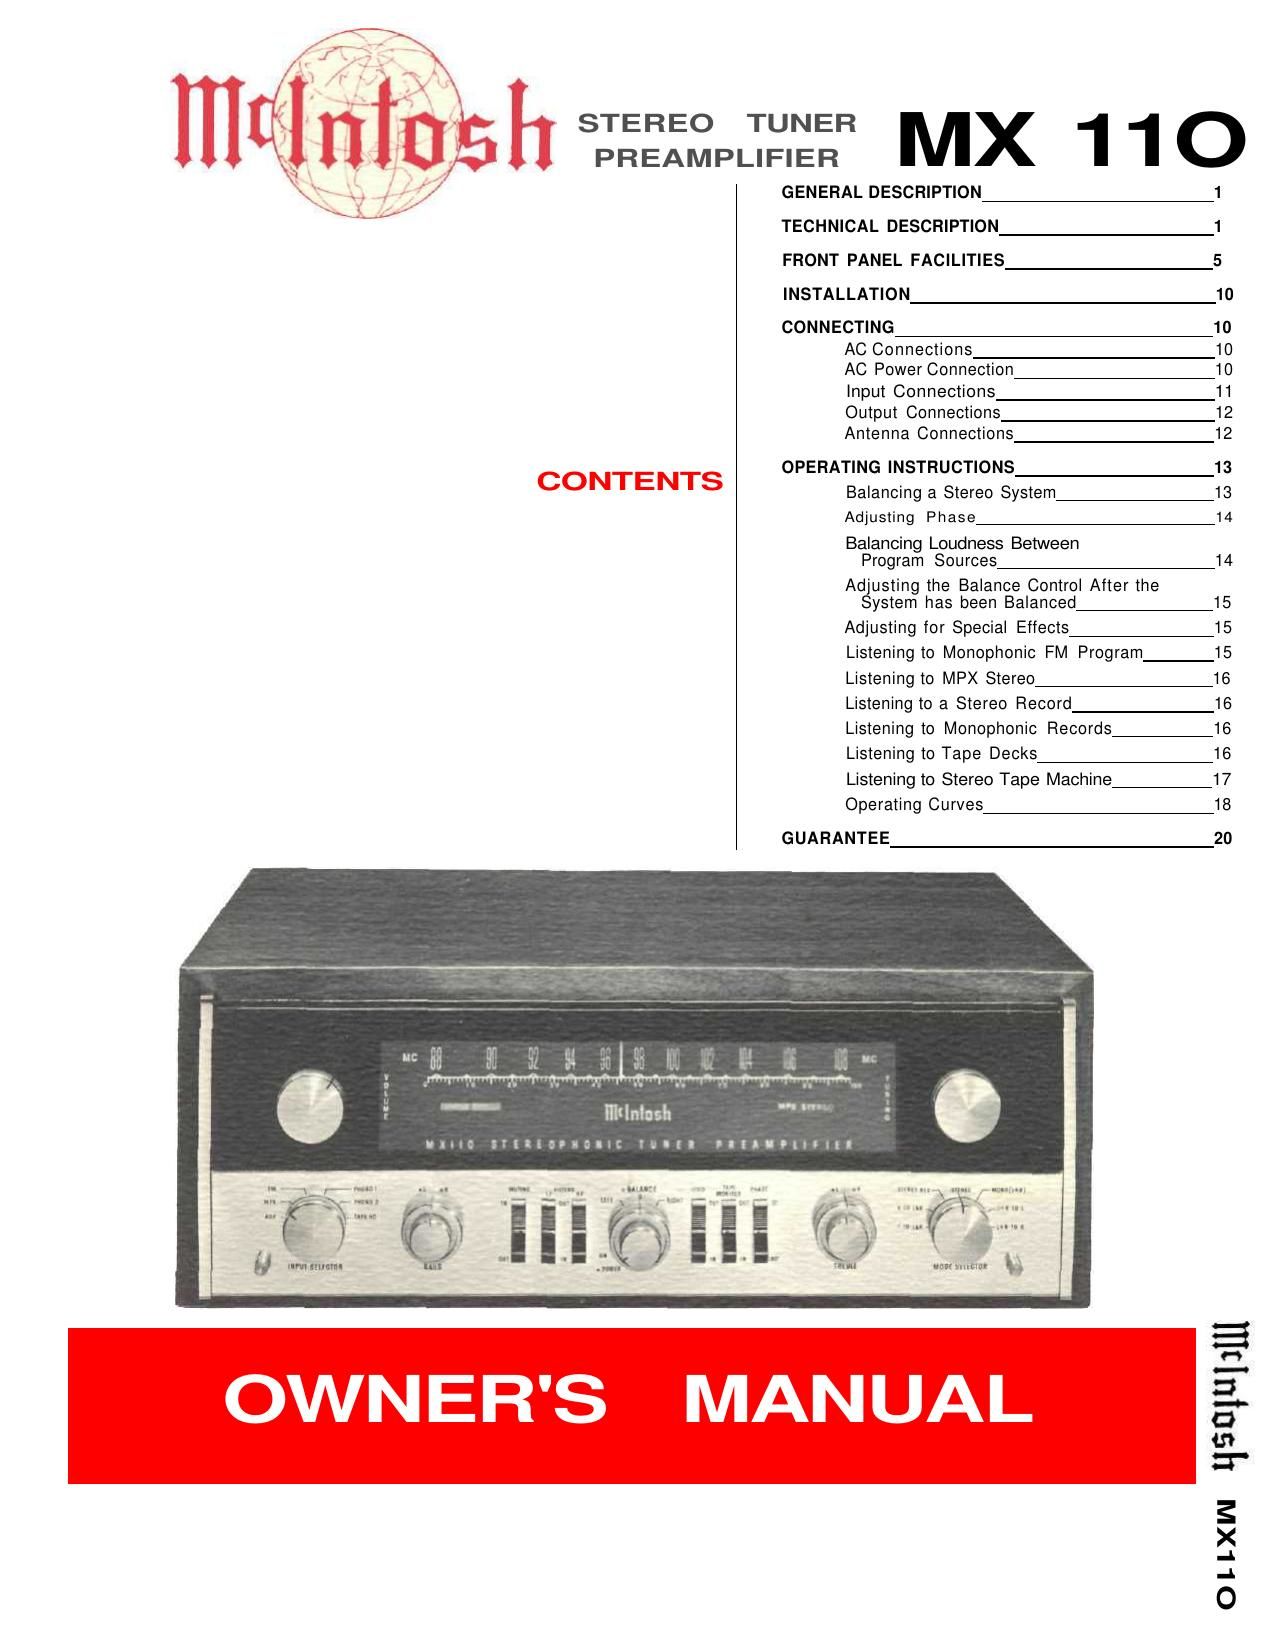 McIntosh MX 110 Owners Manual